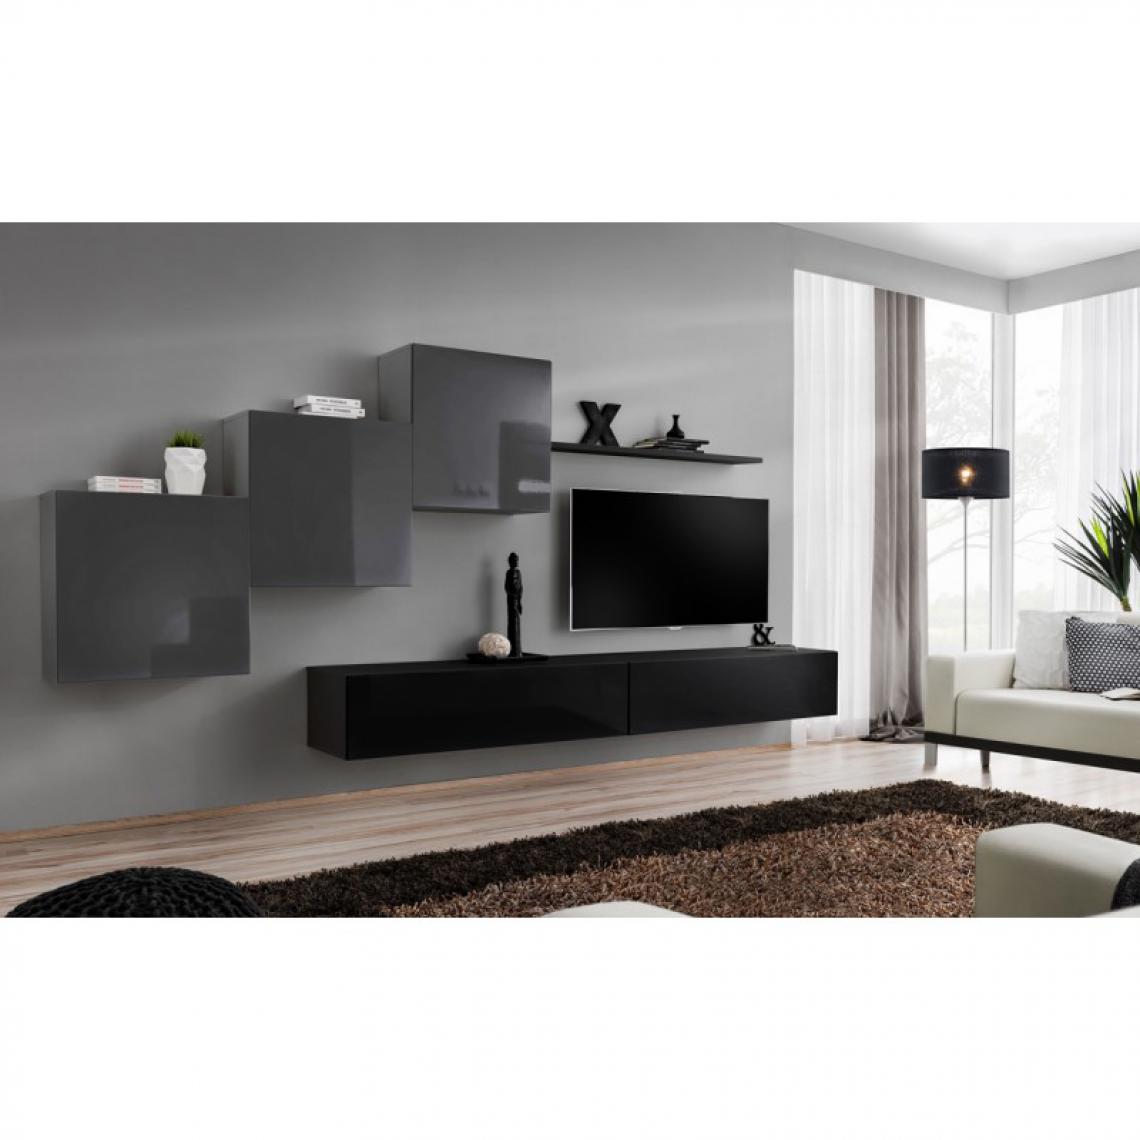 Ac-Deco - Meuble TV Mural Design Switch X 330cm Gris & Noir - Meubles TV, Hi-Fi